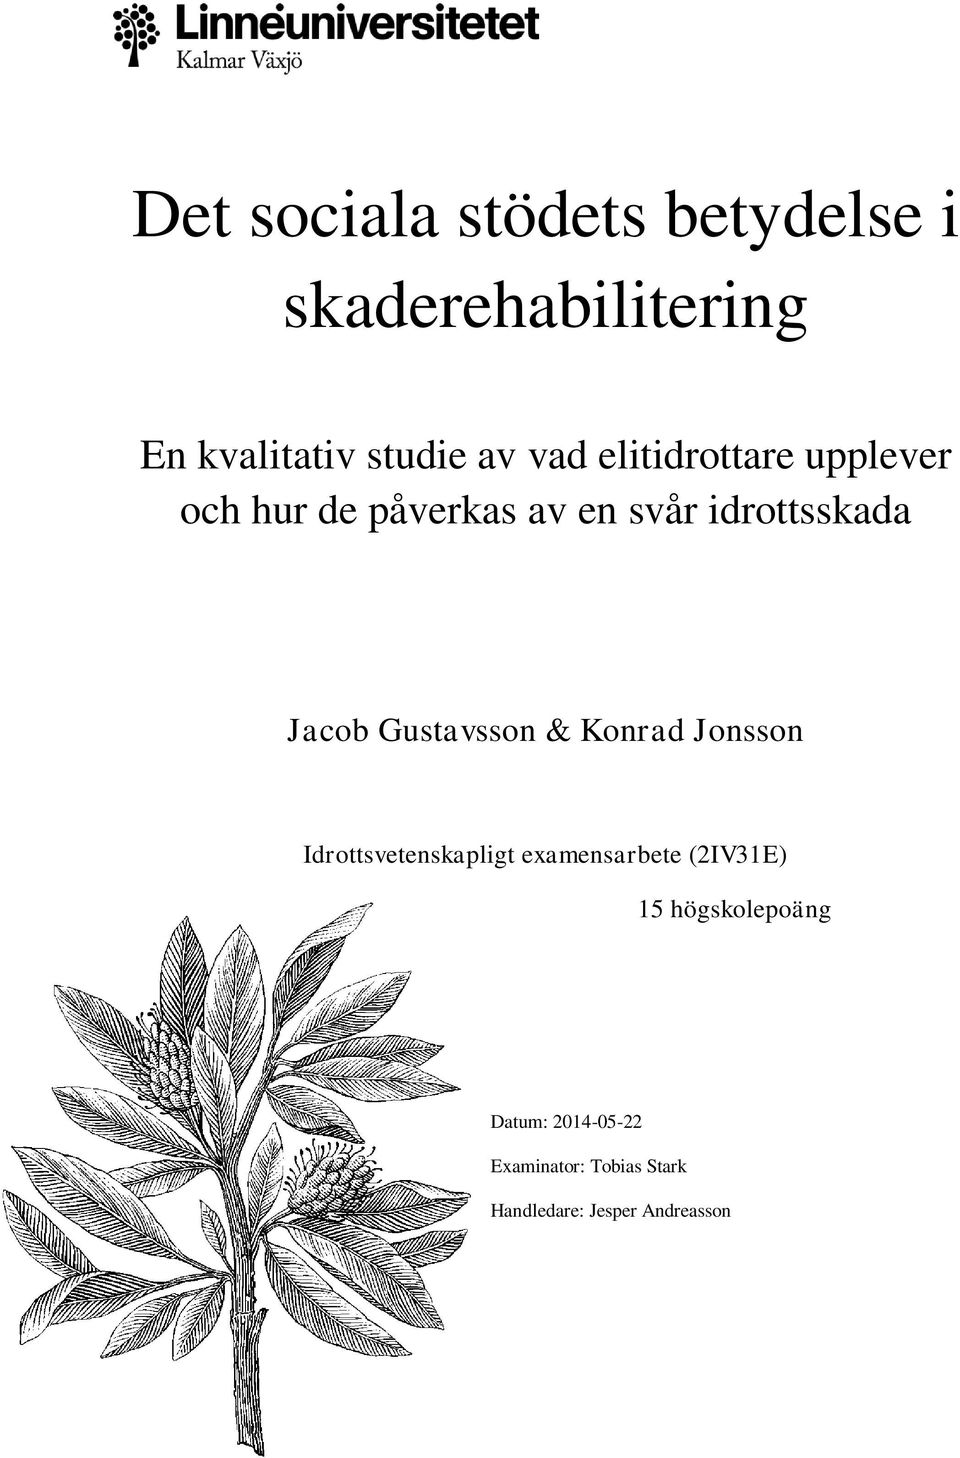 Gustavsson & Konrad Jonsson Idrottsvetenskapligt examensarbete (2IV31E) 15